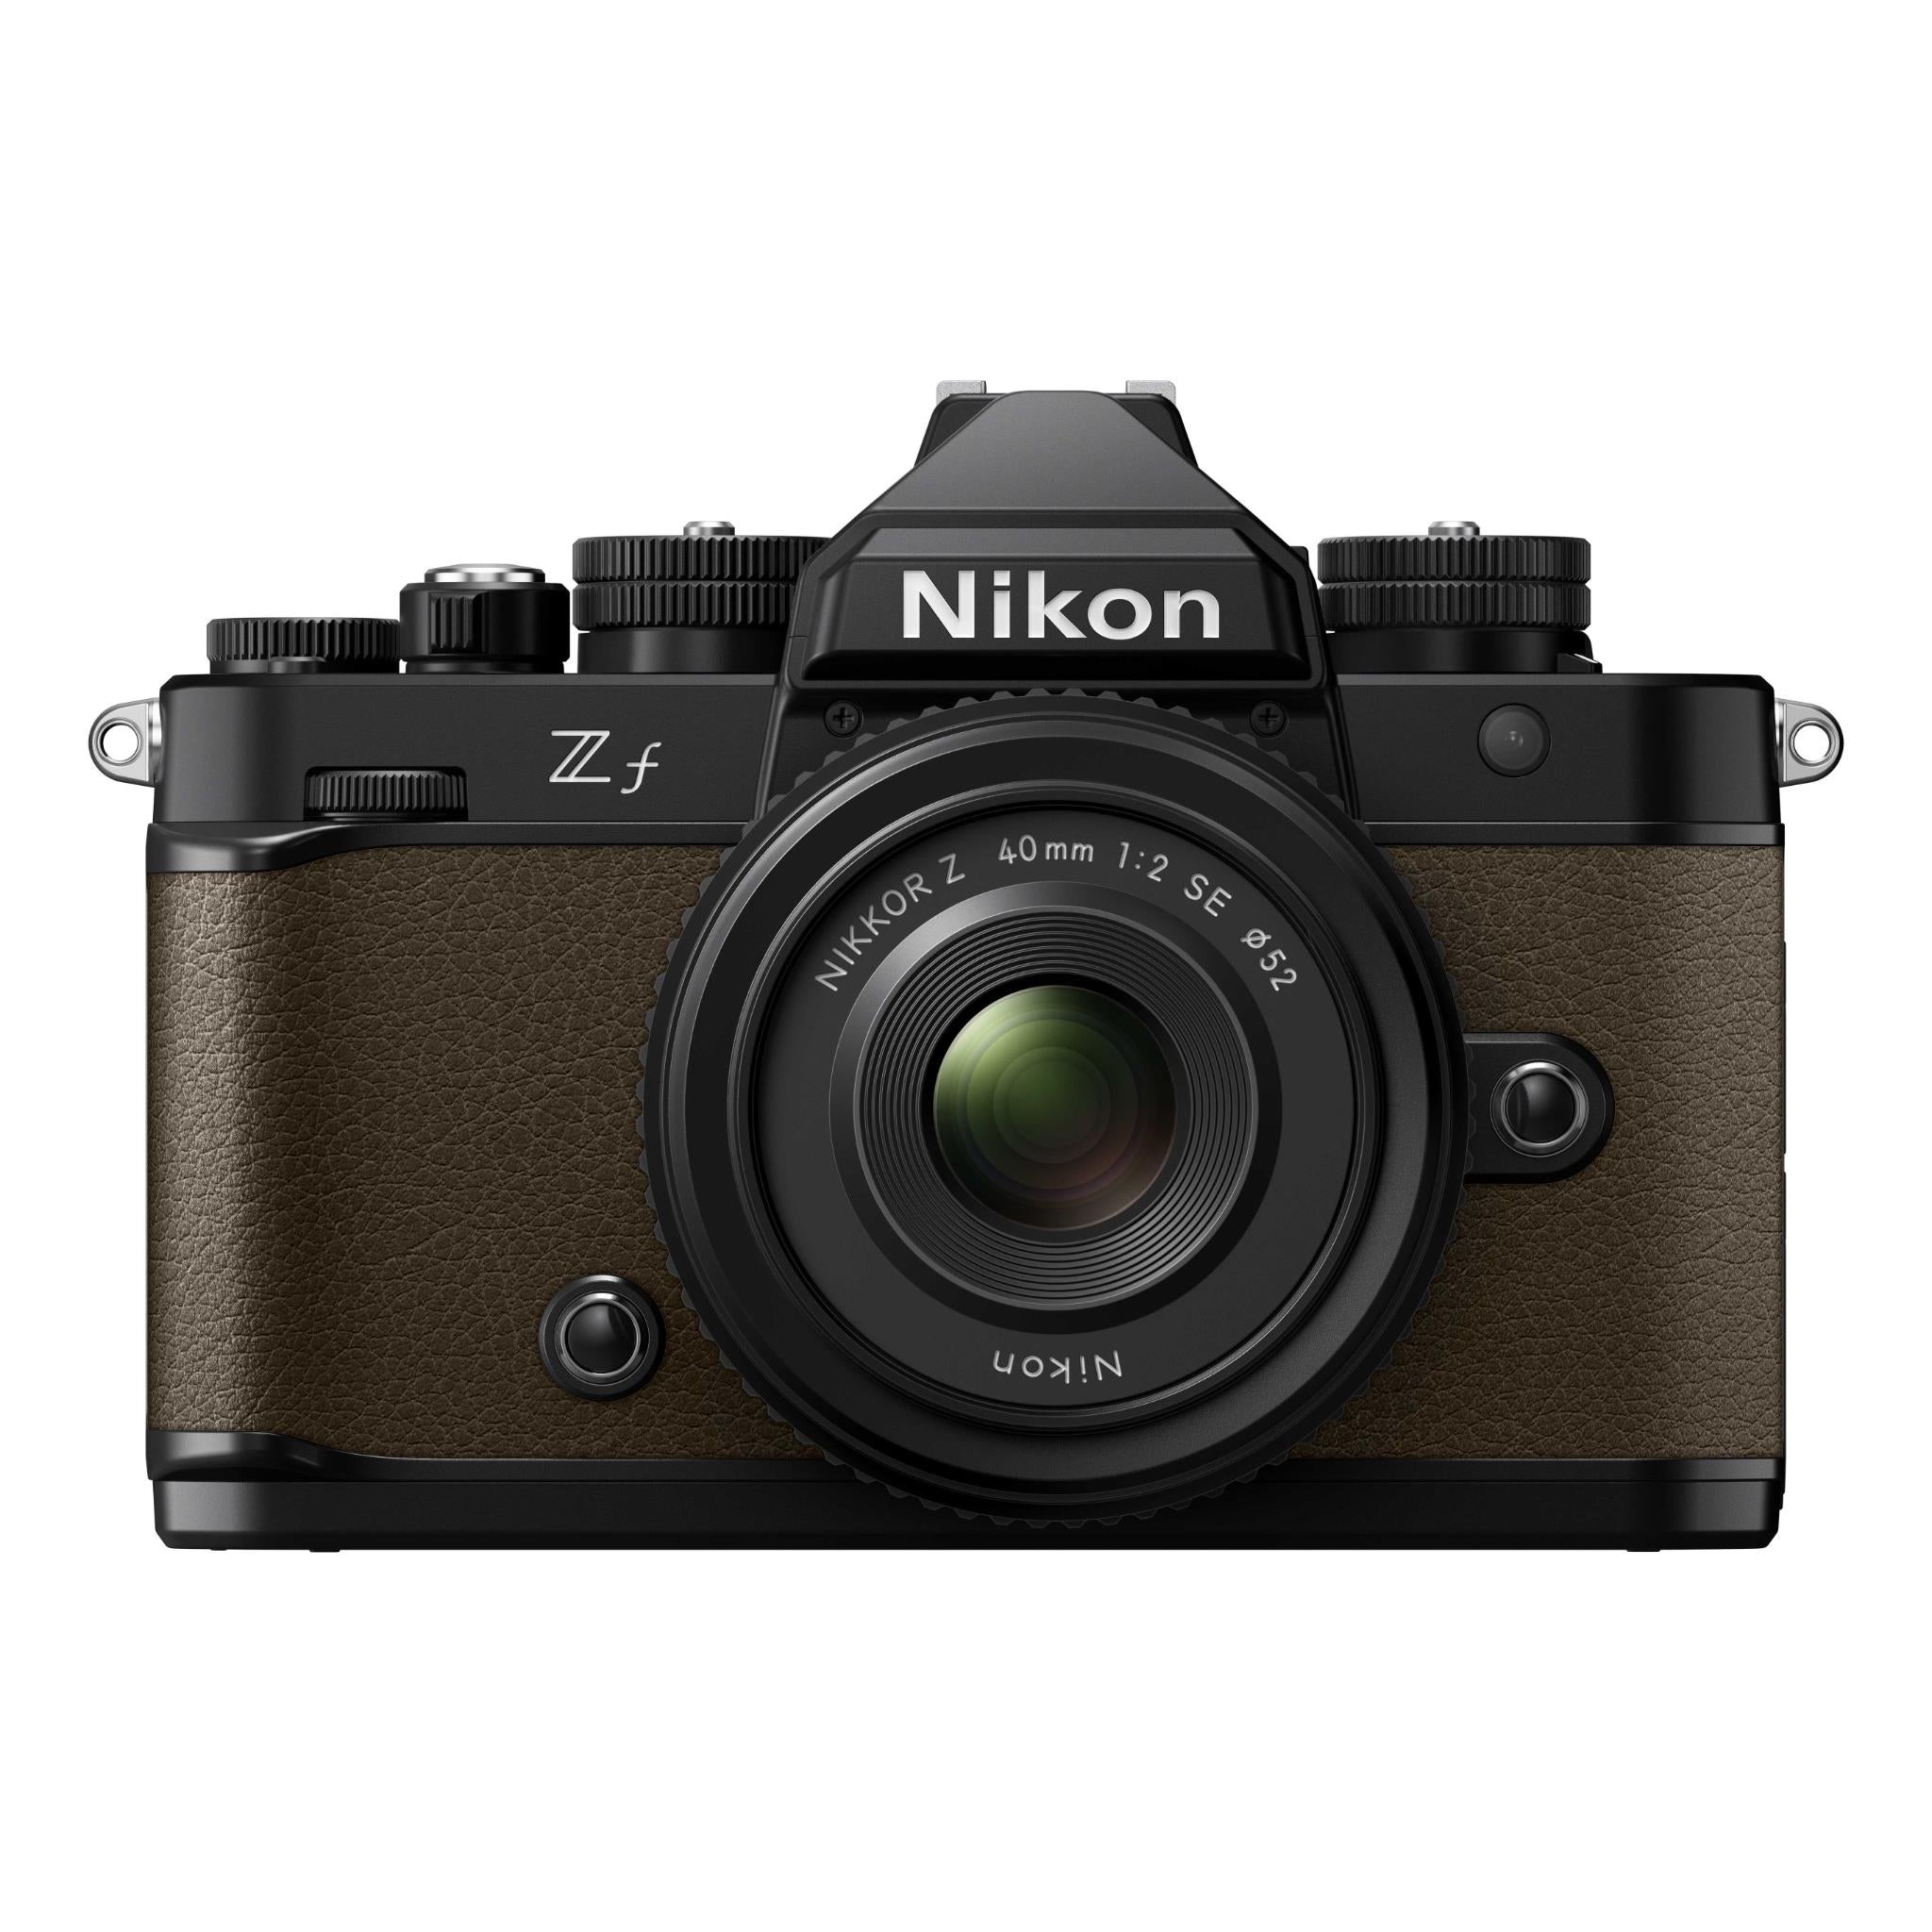 nikon z f full frame mirrorless camera with nikkor z 40mm lens (sepia brown)